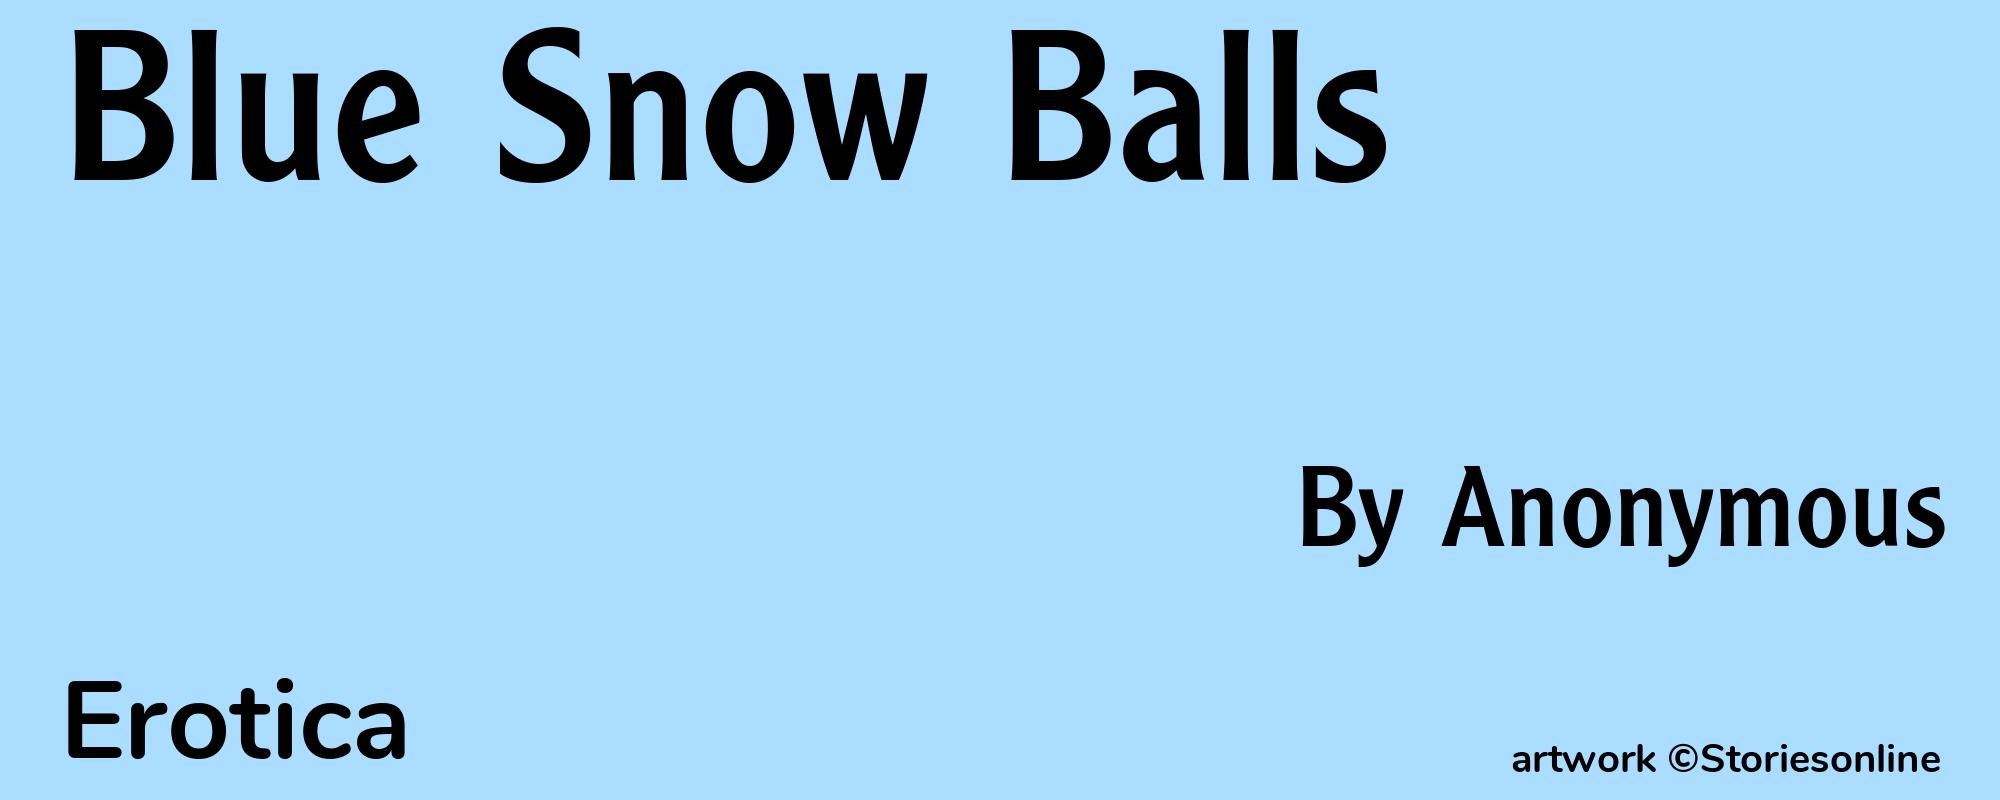 Blue Snow Balls - Cover